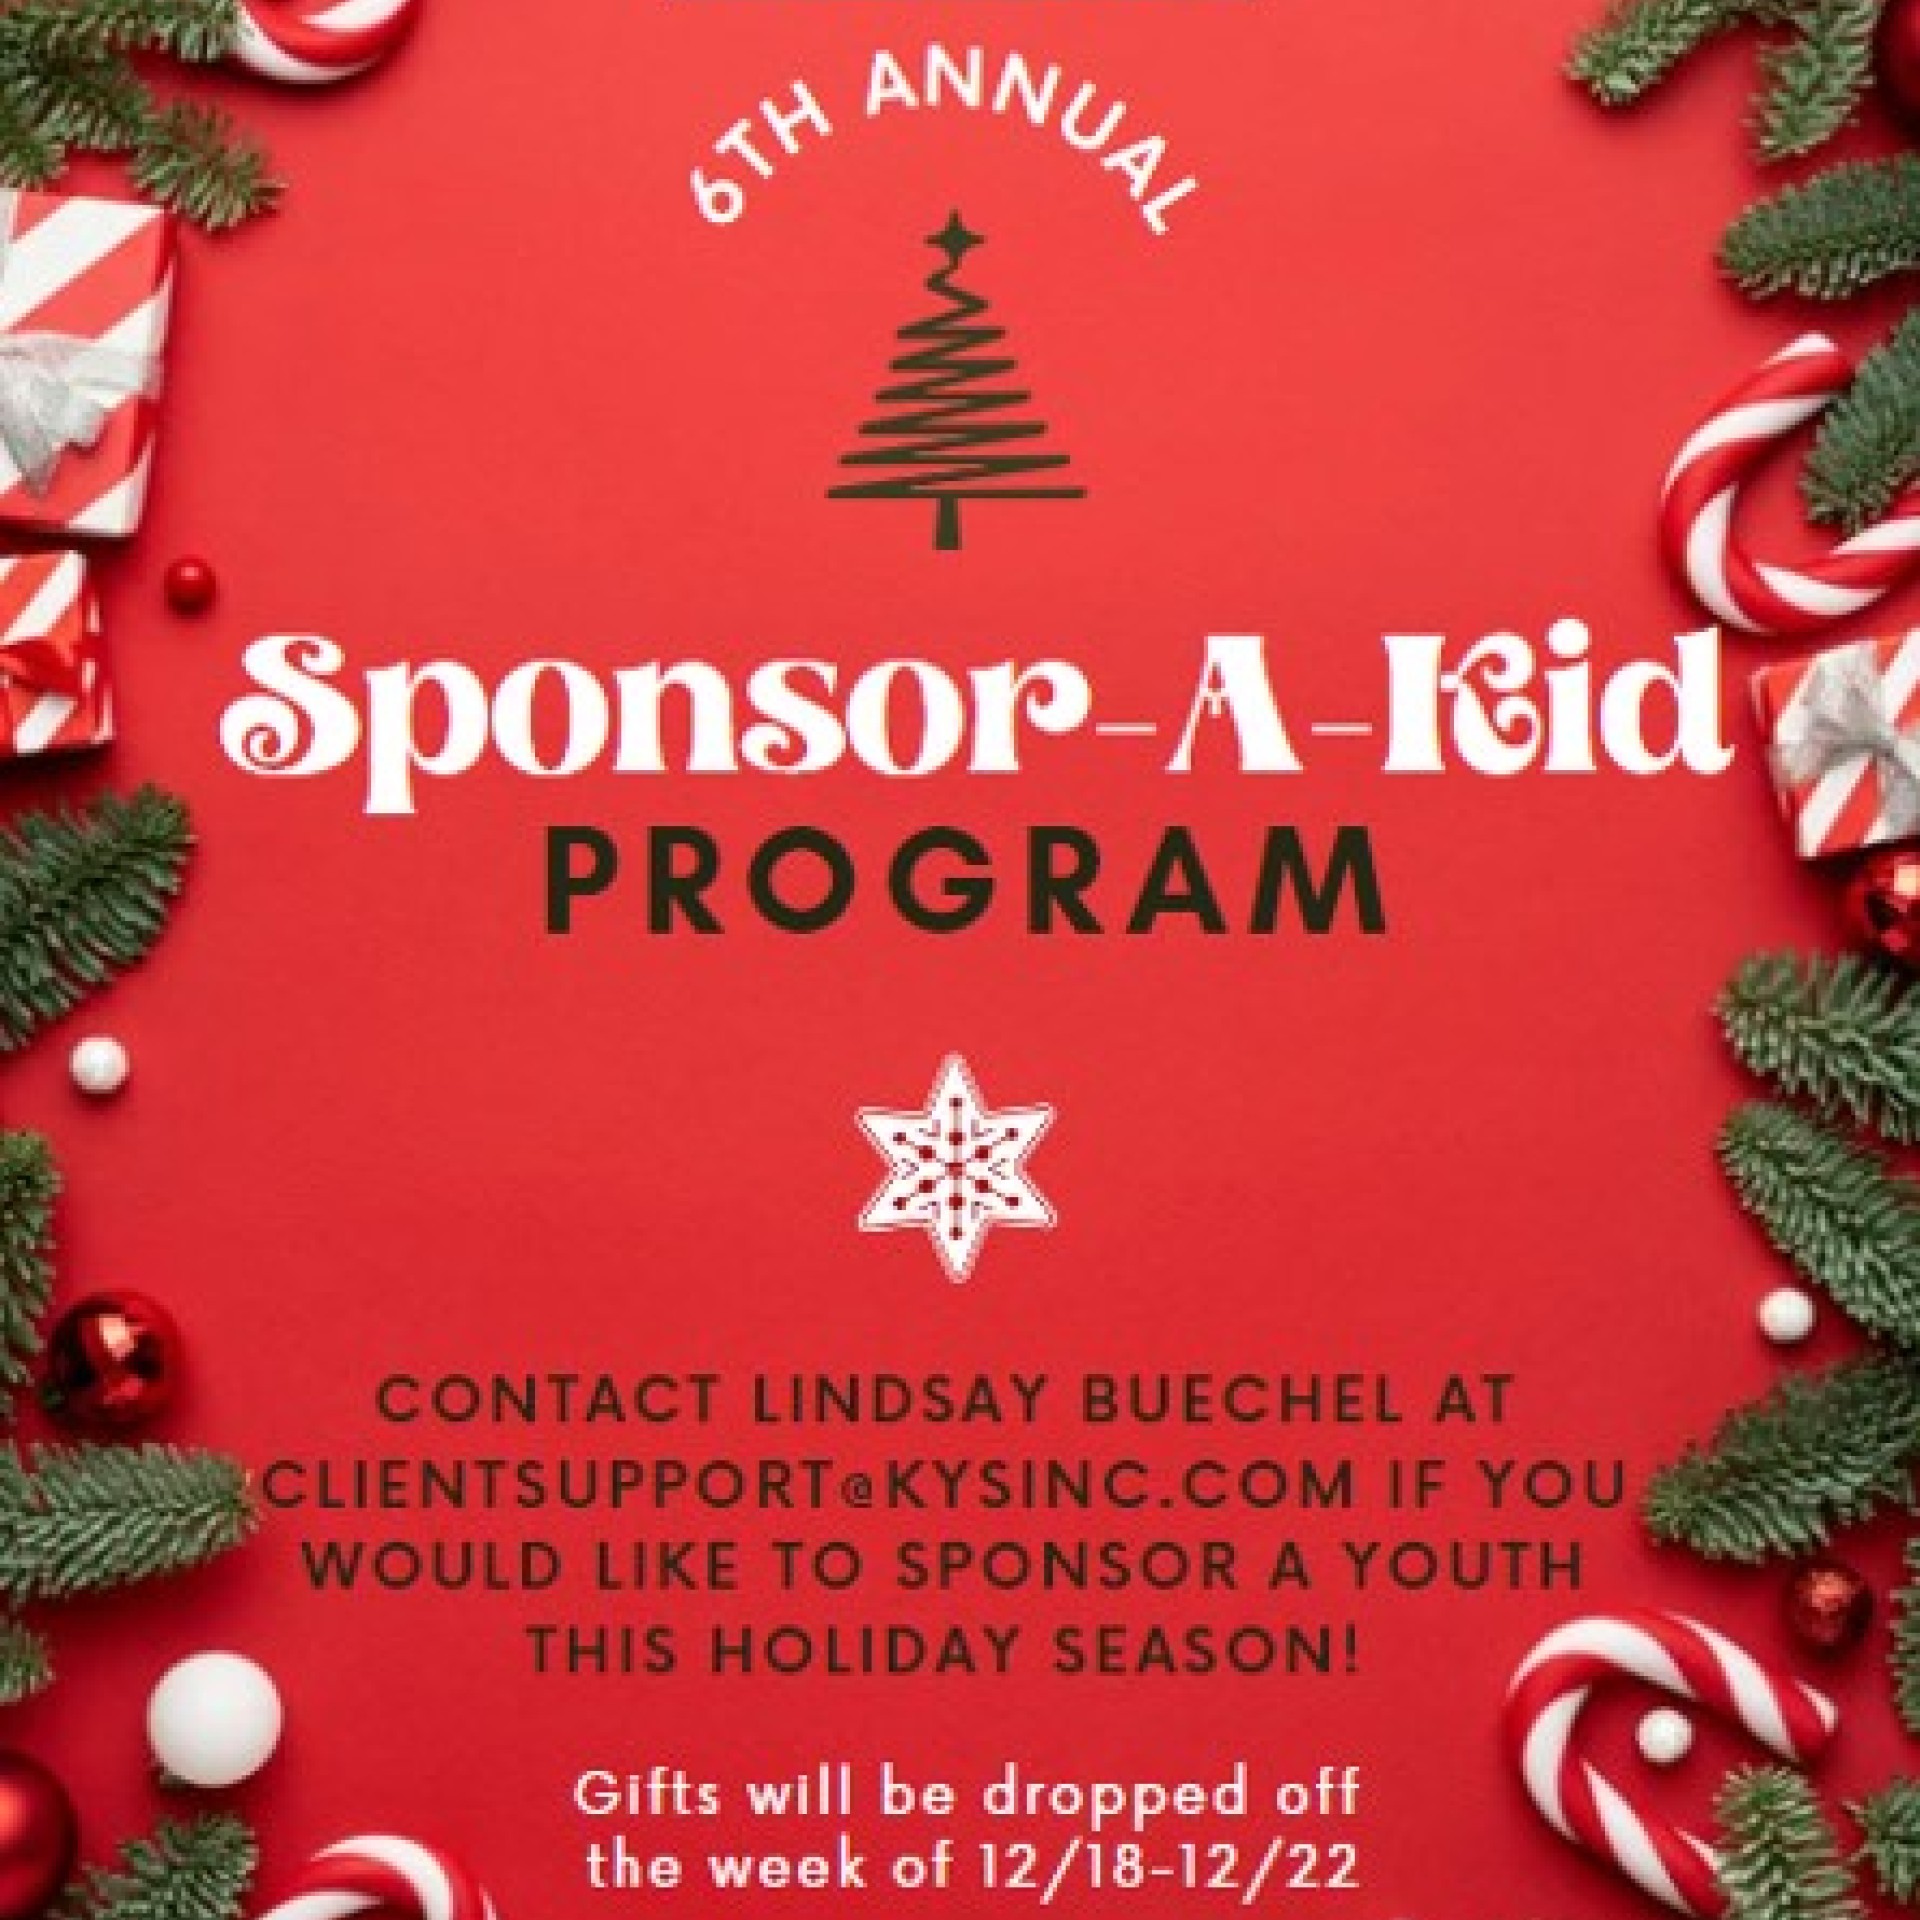 6th Annual Sponsor-a-Kid Program